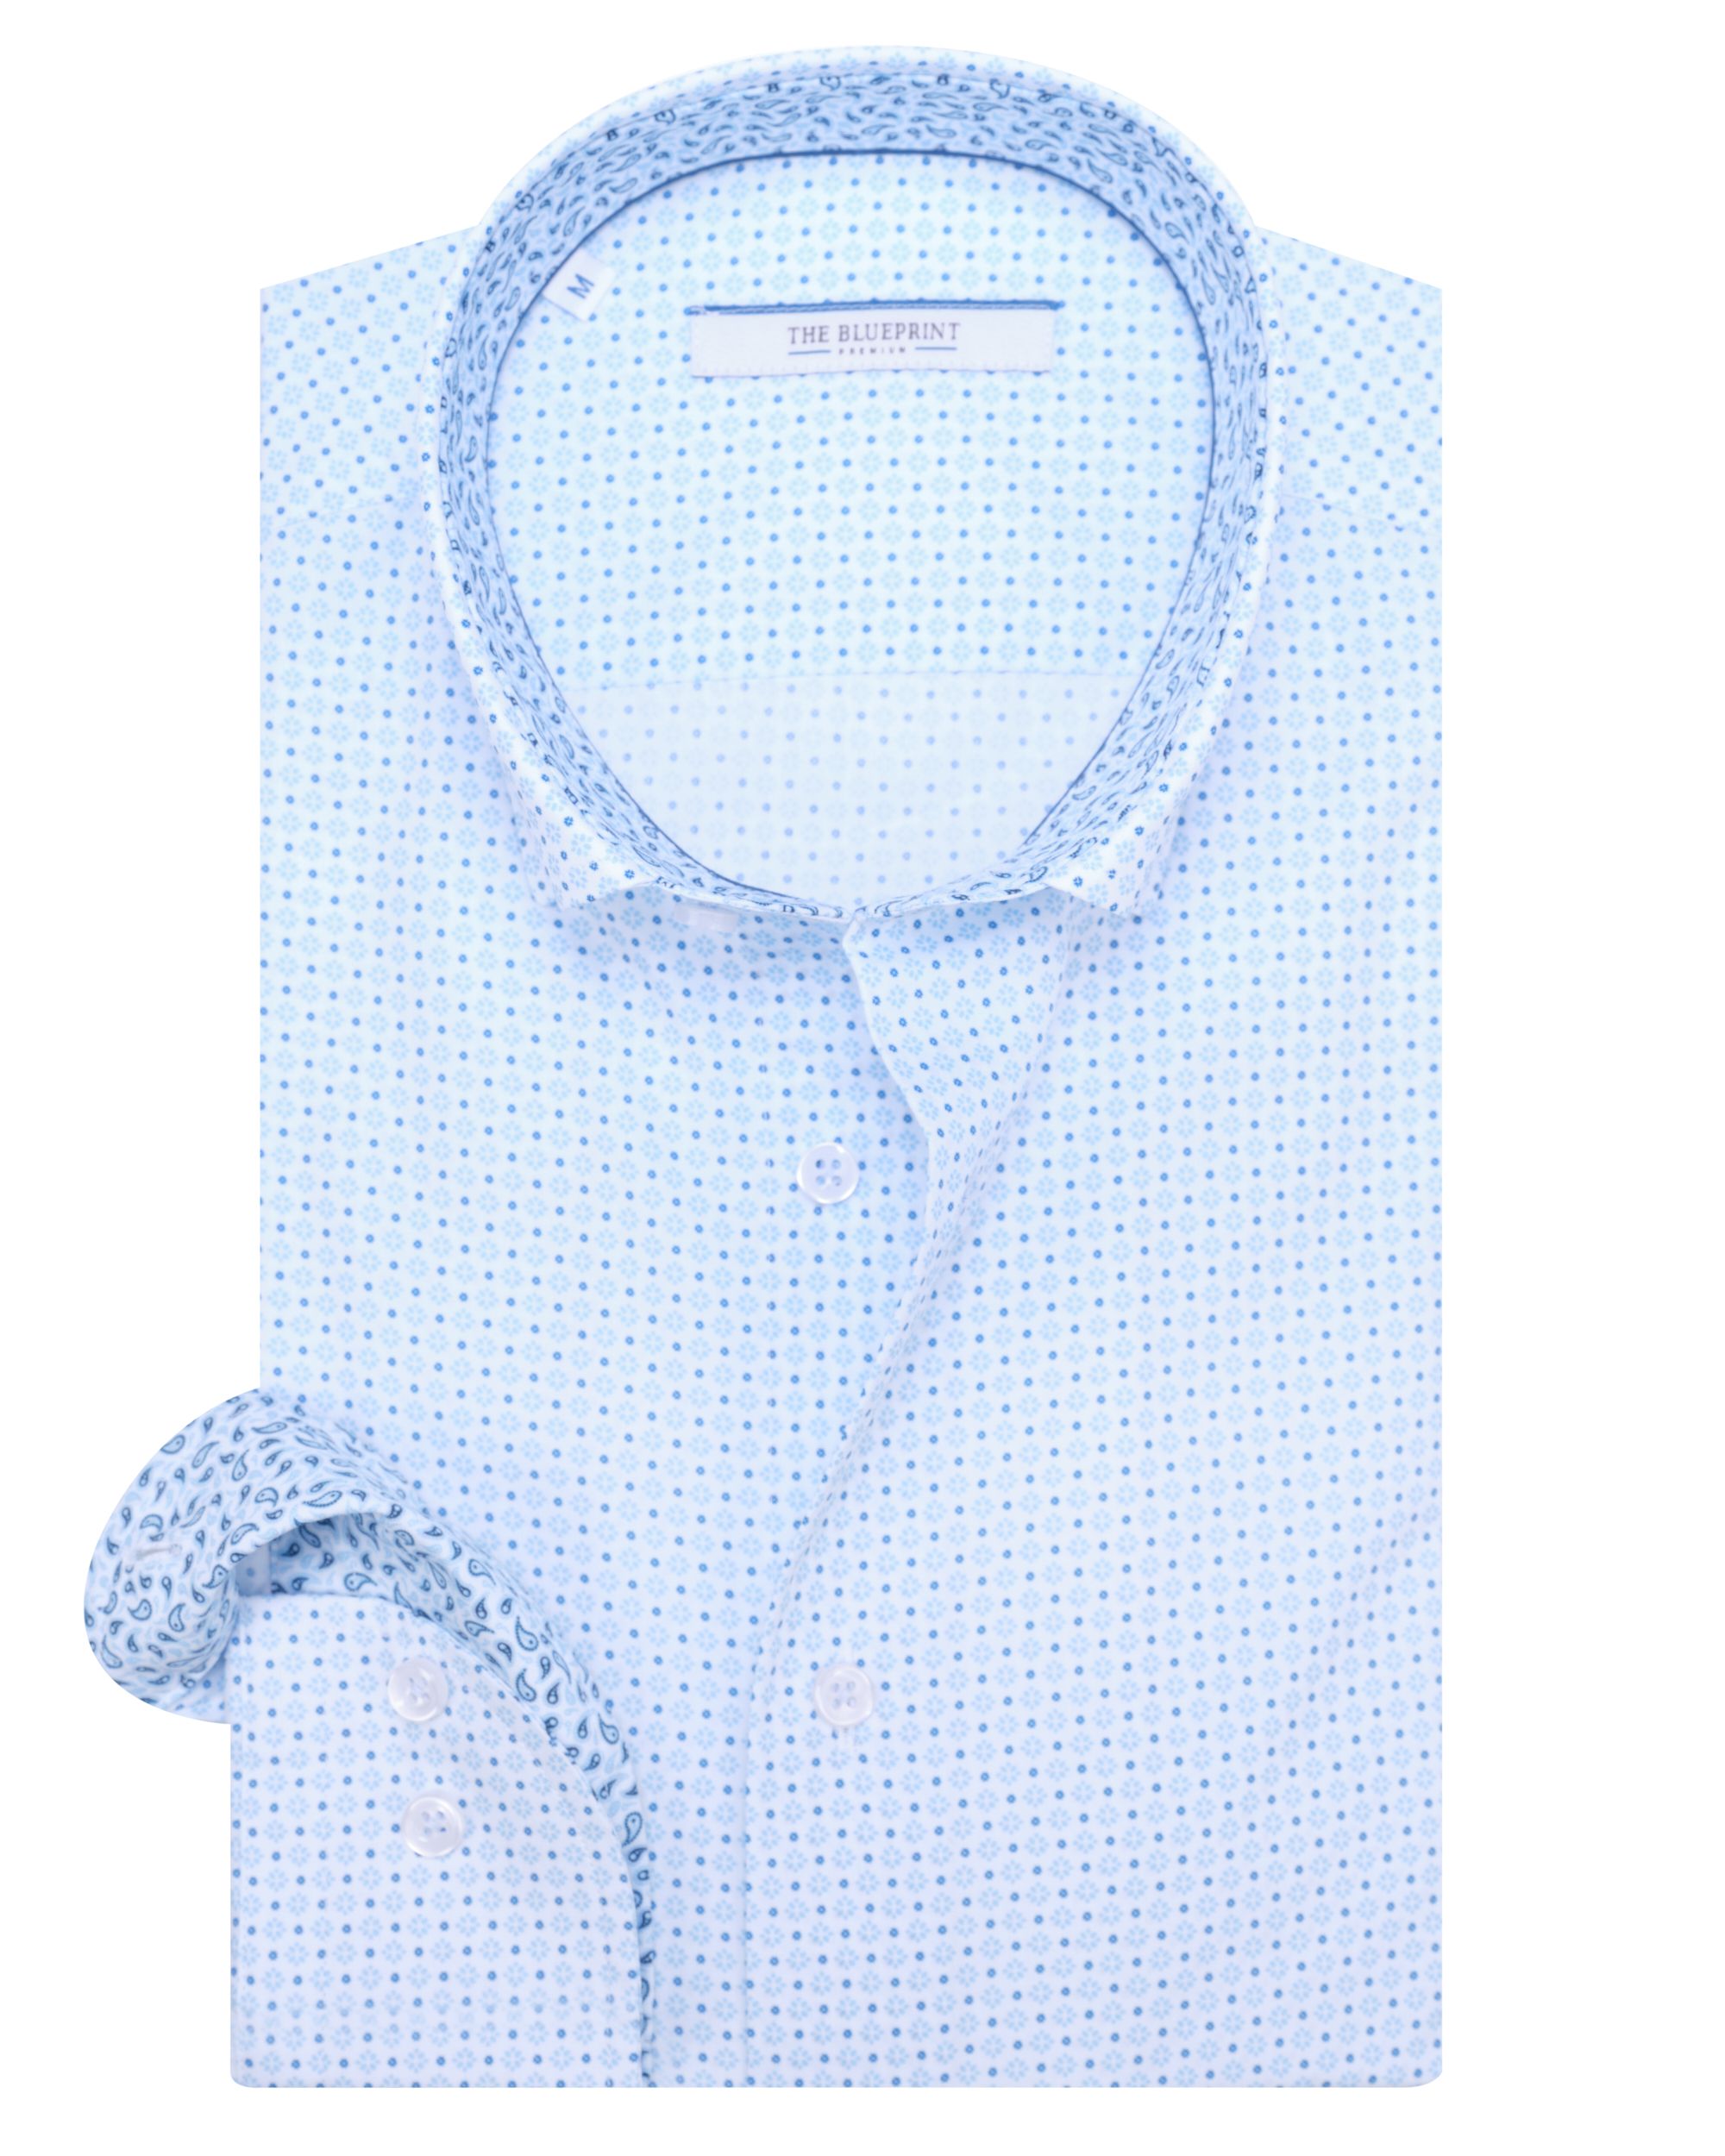 The BLUEPRINT Premium Casual Overhemd LM Lichtblauw dessin 082238-001-L